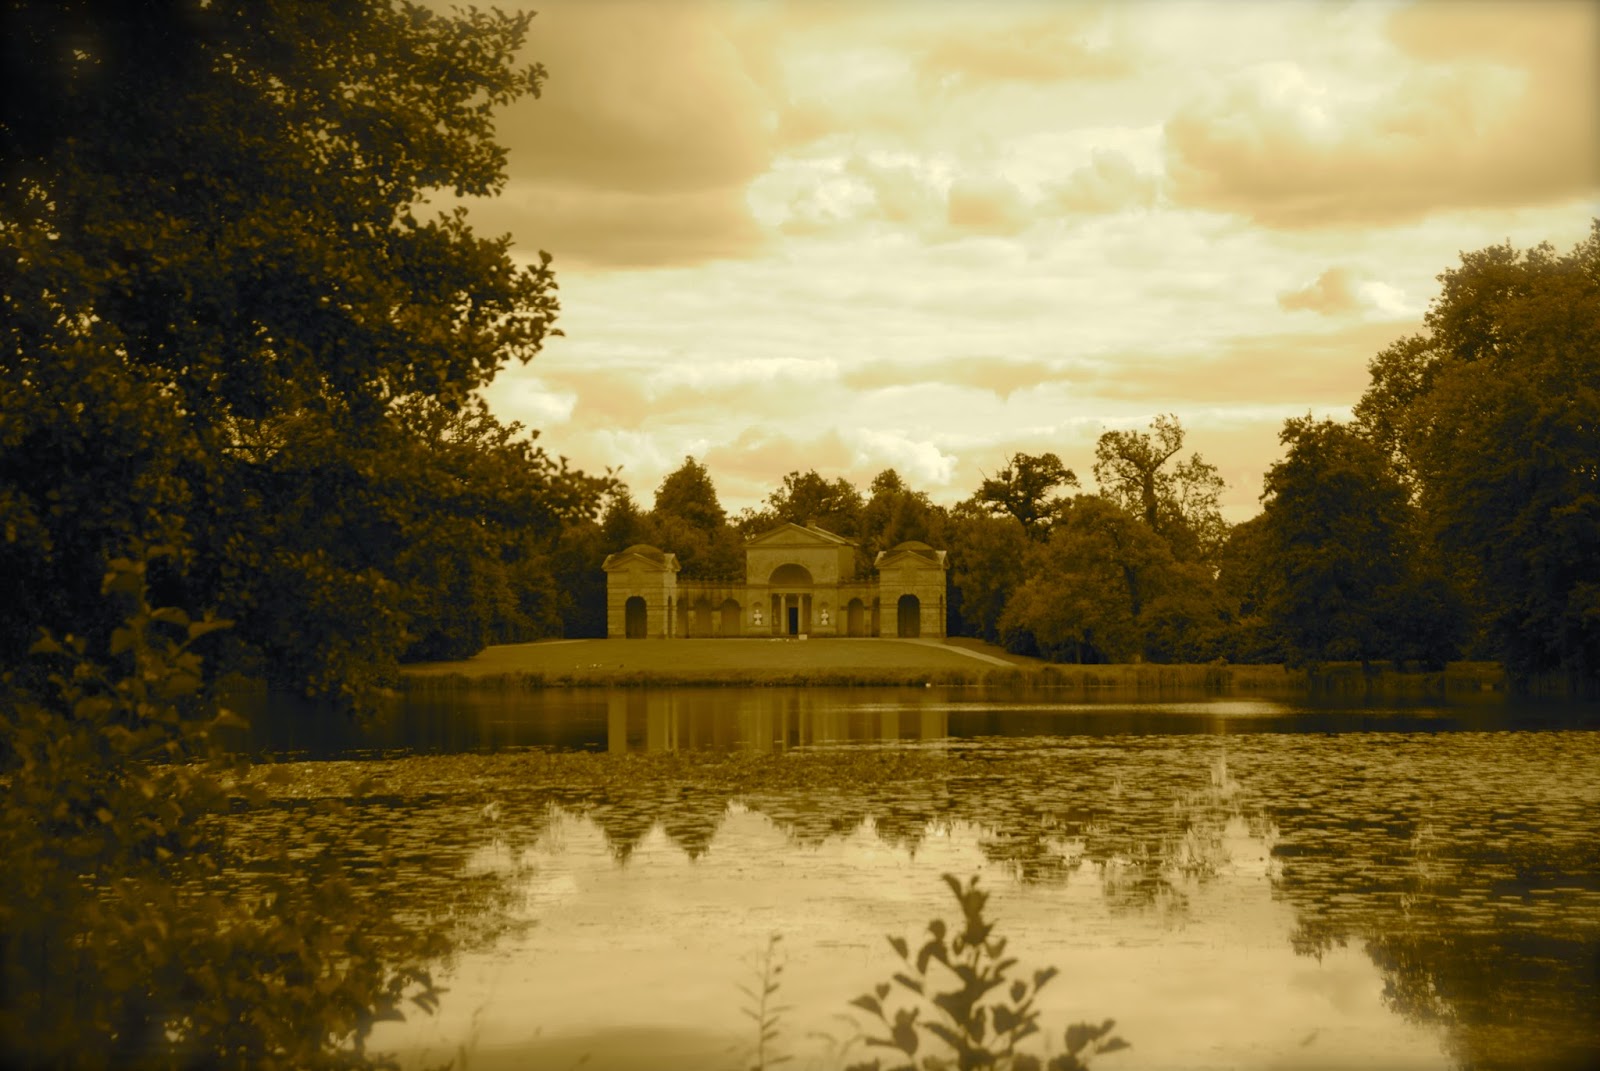 Stowe House Gardens, Buckinghamshire, England